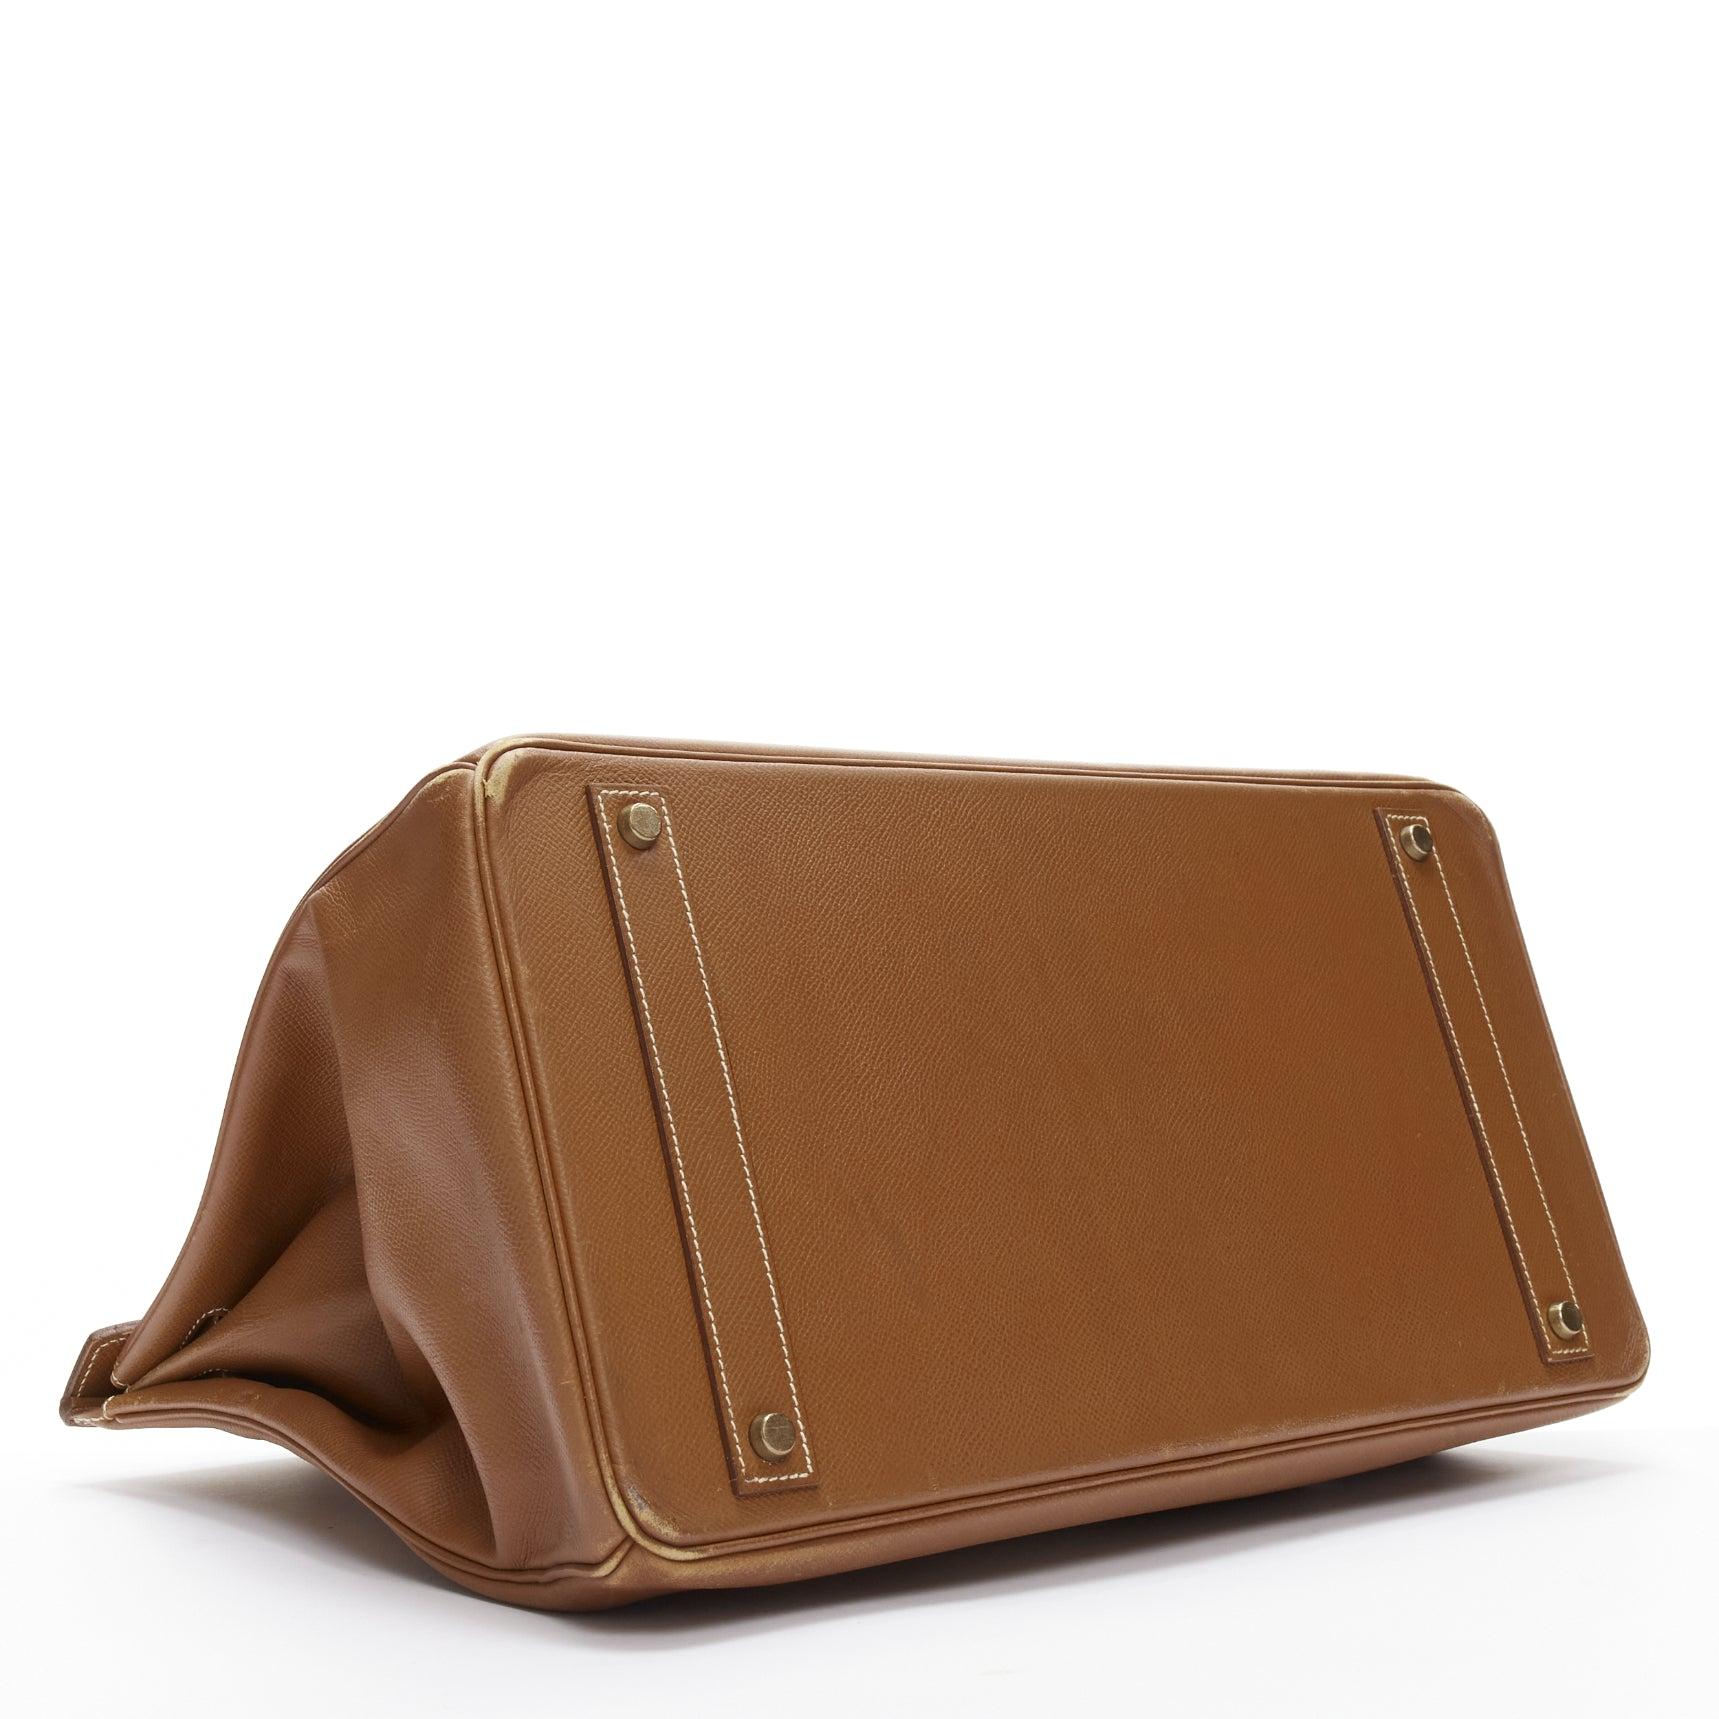 HERMES Birkin 40 Epsom brown leather gold hardware leather tote bag For Sale 1